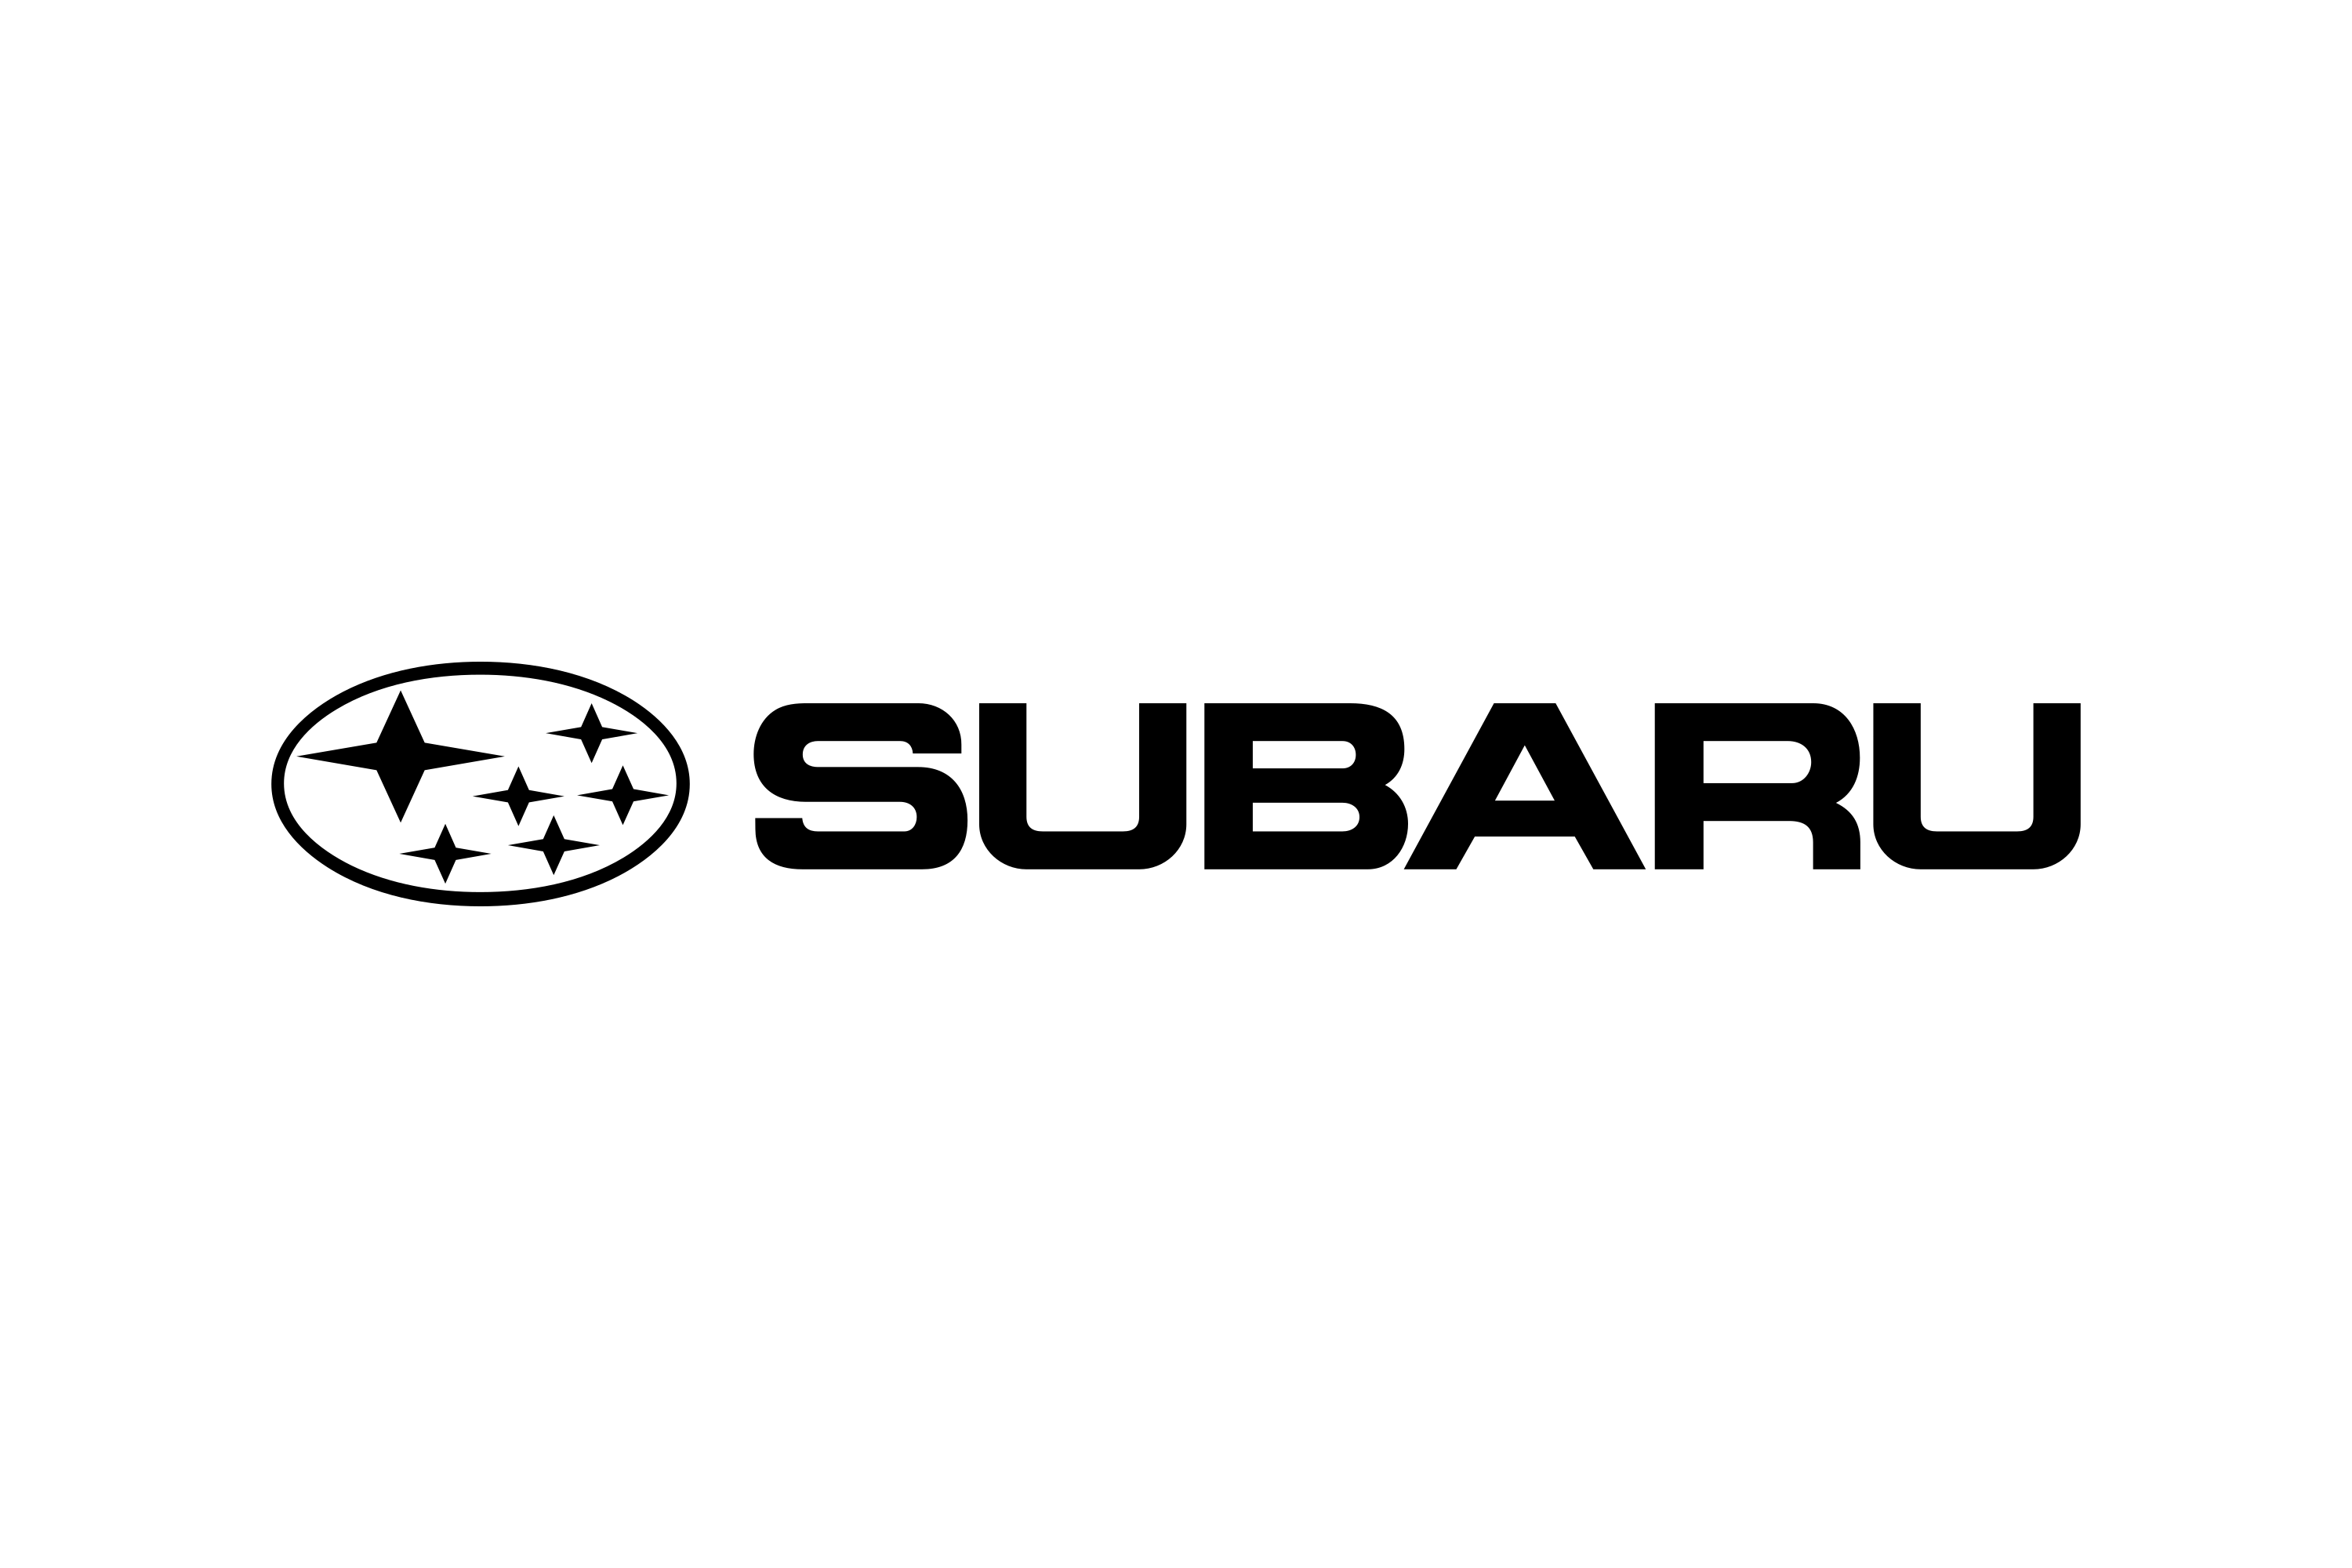 Download Subaru Logo In Svg Vector Or Png File Format   Logo.wine - Subaru, Transparent background PNG HD thumbnail